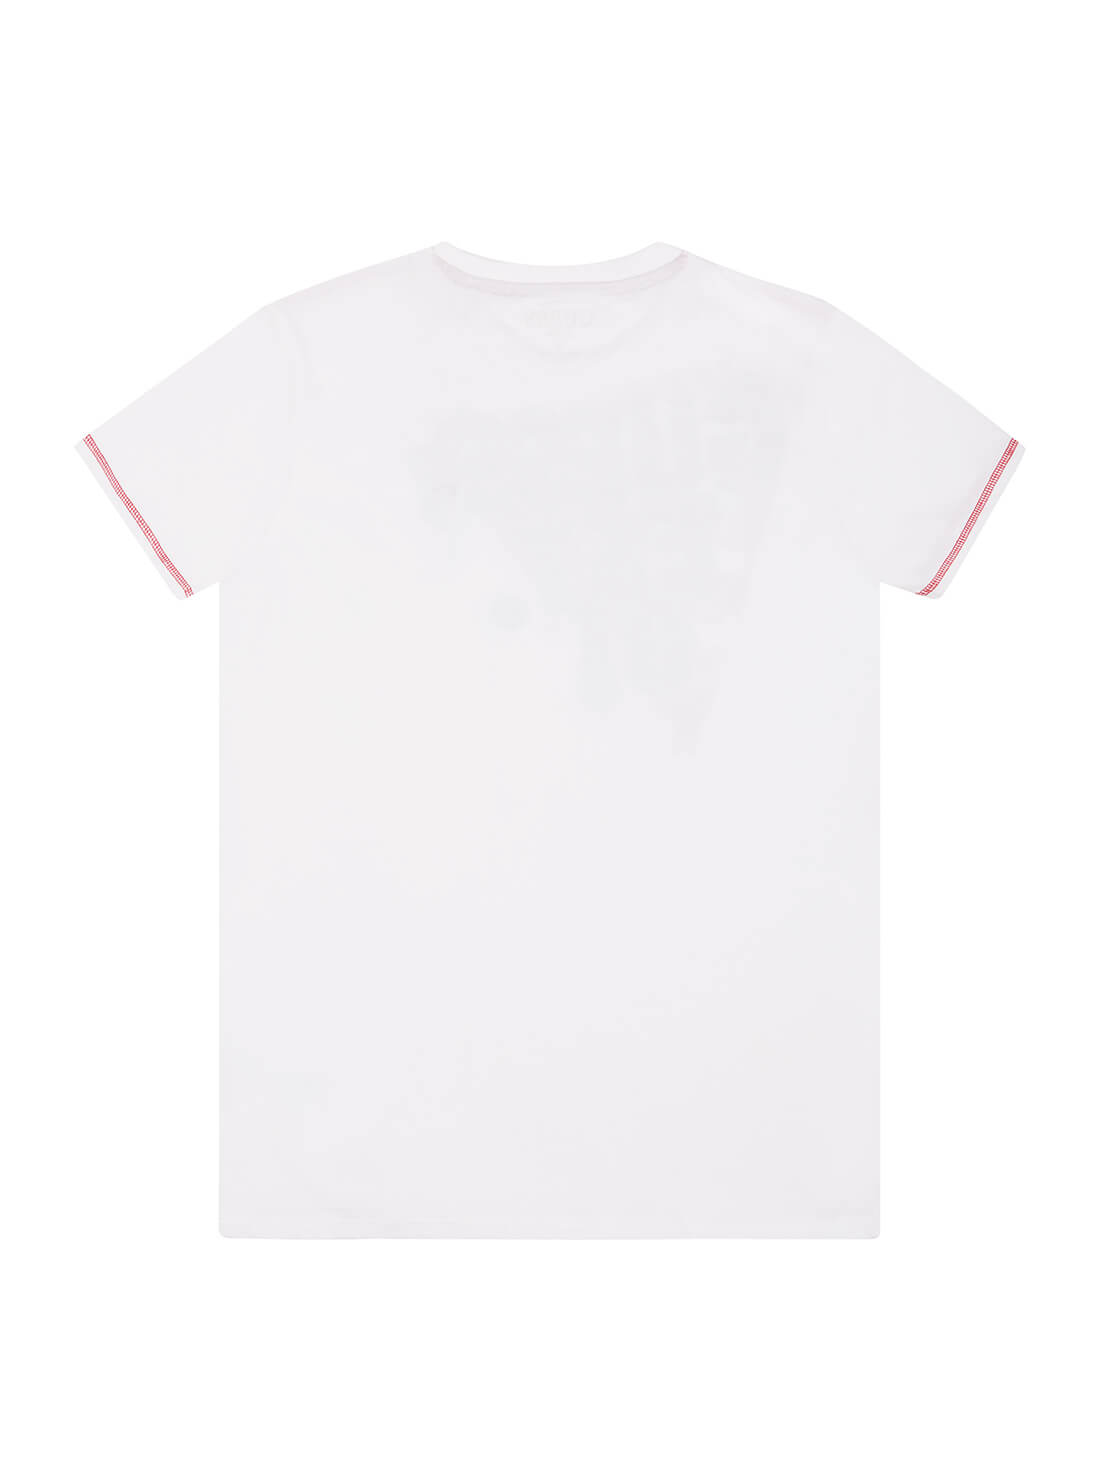 GUESS Big Boy White Graphic Short Sleeve Logo T-Shirt (7-16) 1YI15K8HM0 Back View